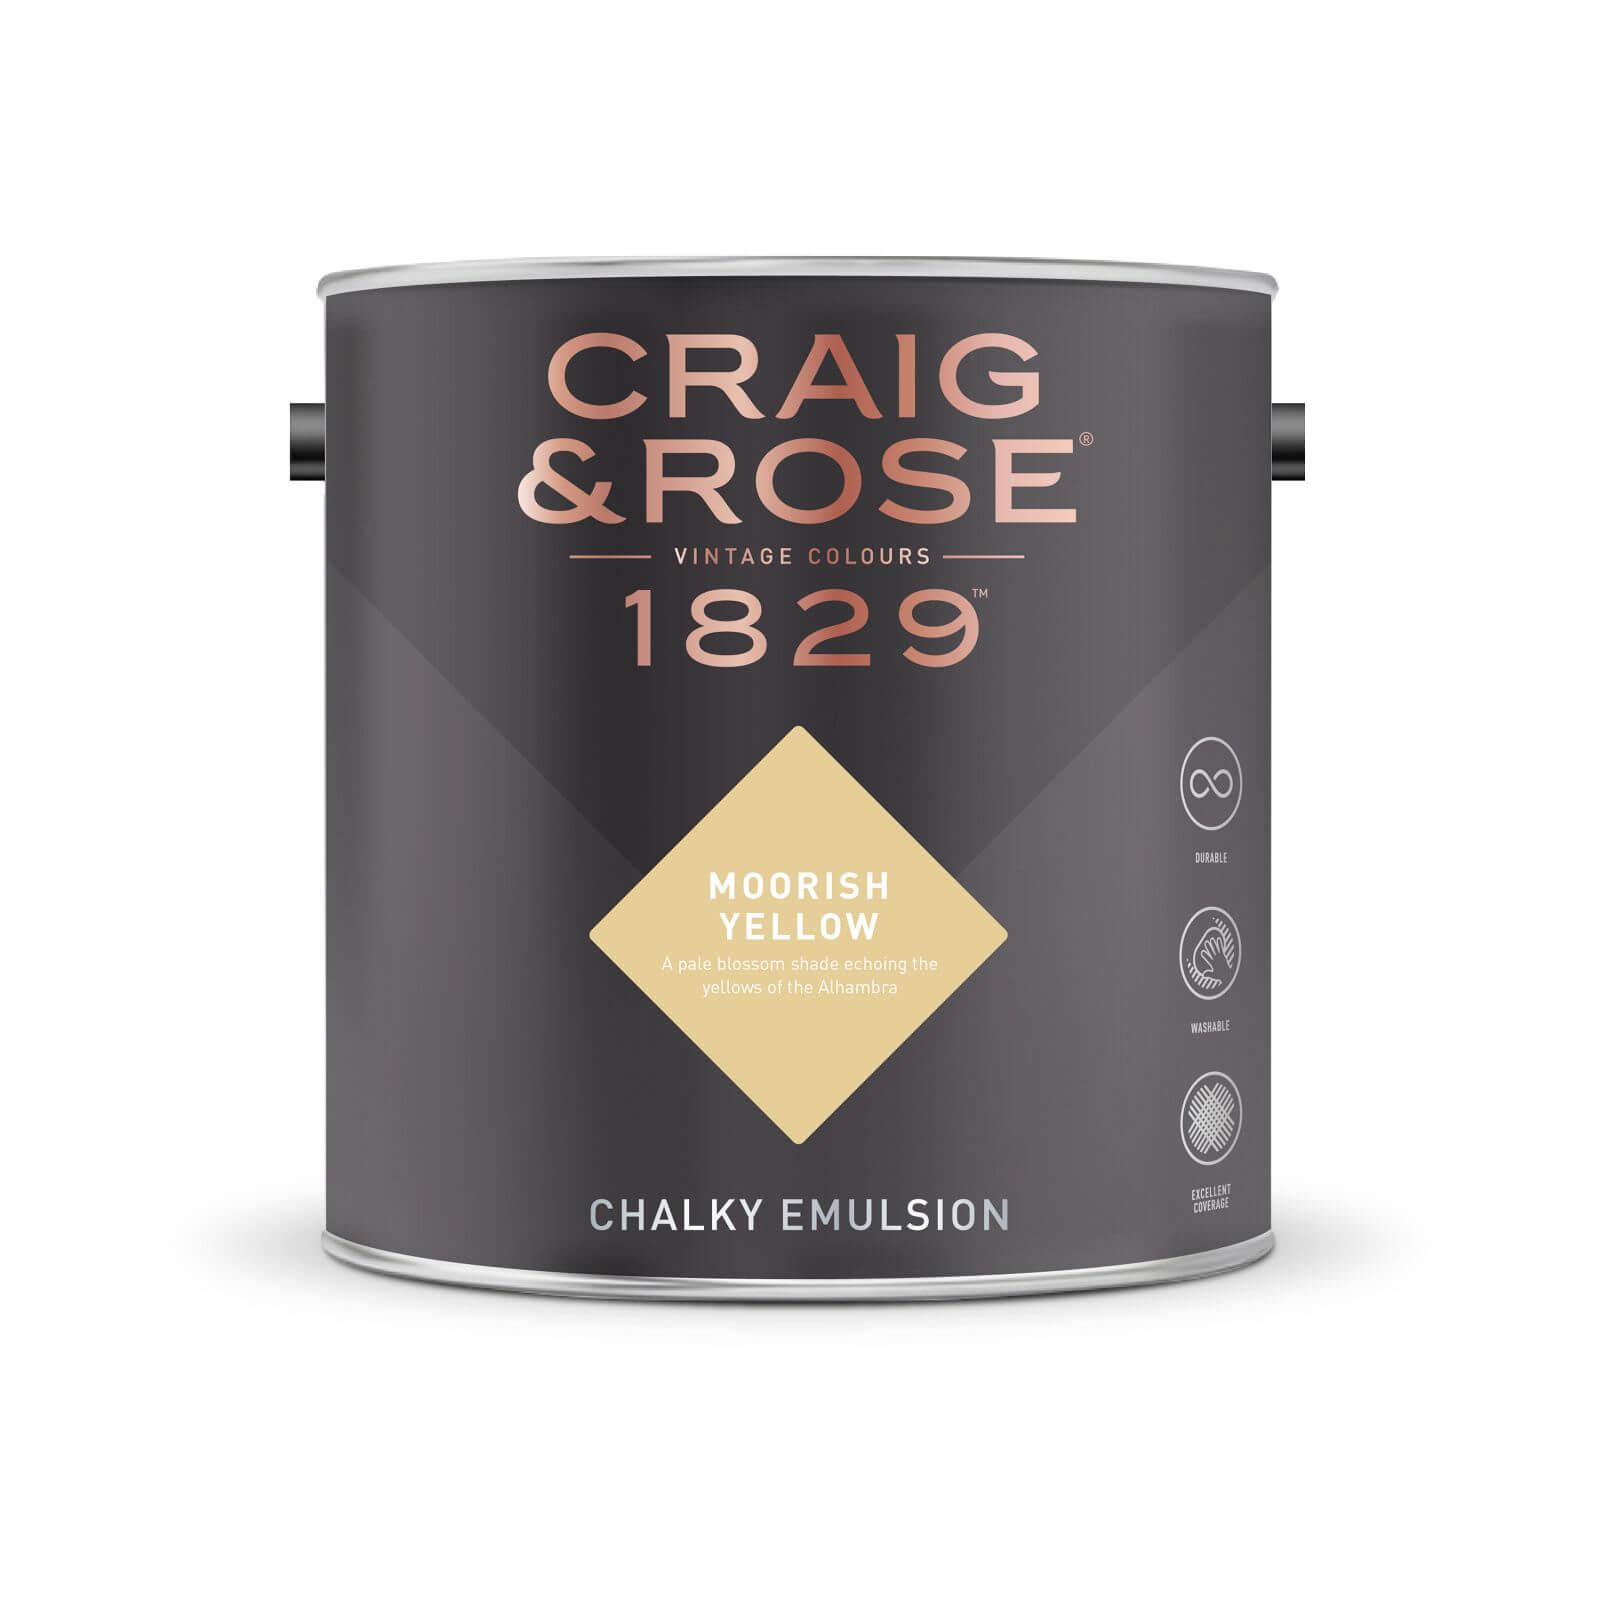 Craig & Rose 1829 Chalky Emulsion Paint Moorish Yellow - 5L